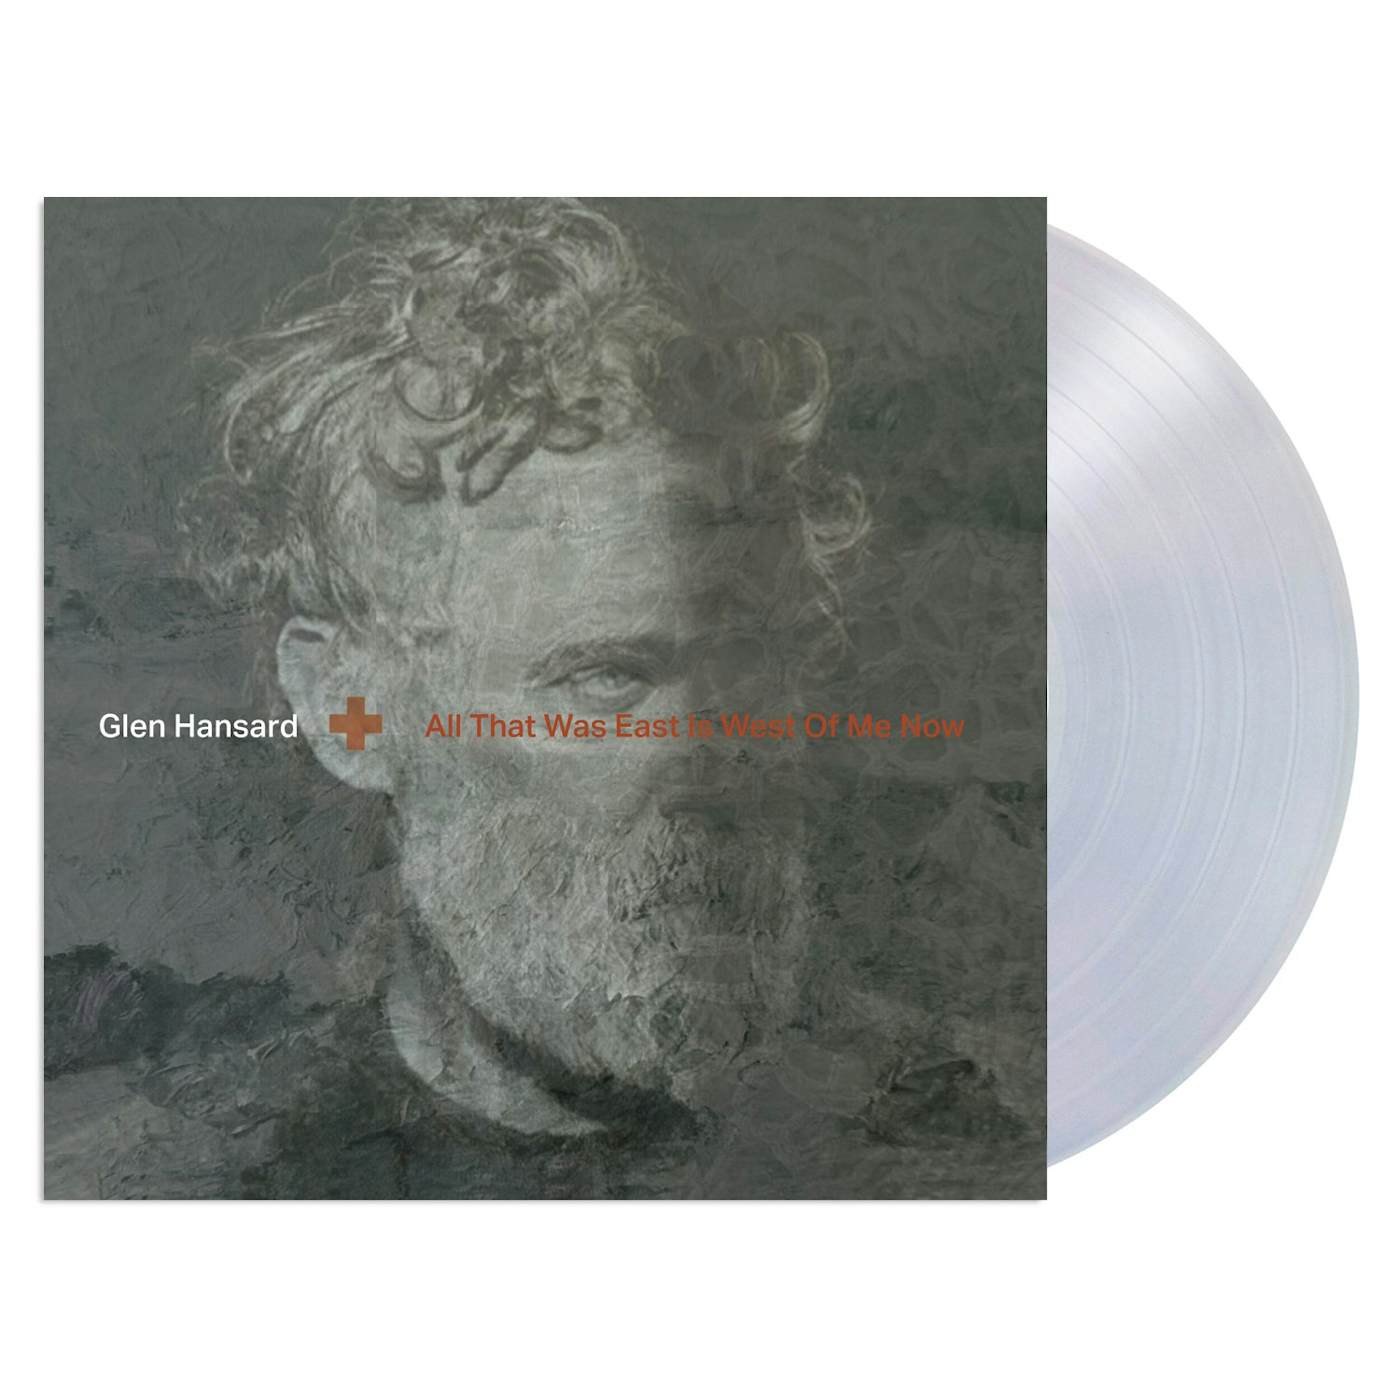 Glen Hansard All That Was East Is West Of Me Now LP (Clear Vinyl)